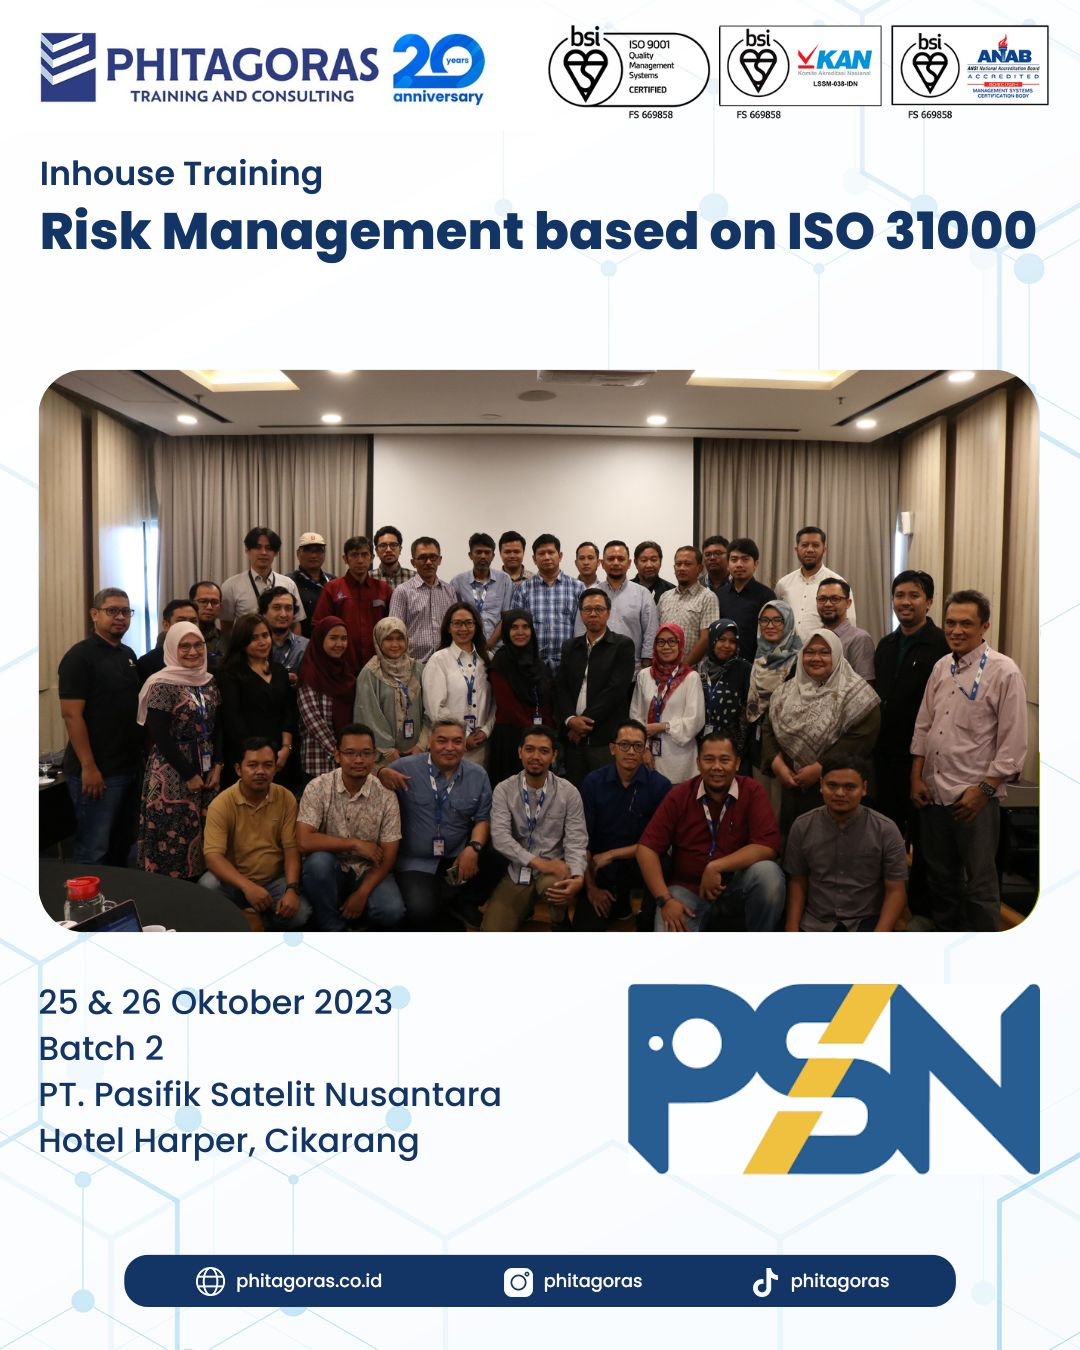 Inhouse Training Risk Management based on ISO 31000 - PT. Pasifik Satelit Nusantara Batch 2